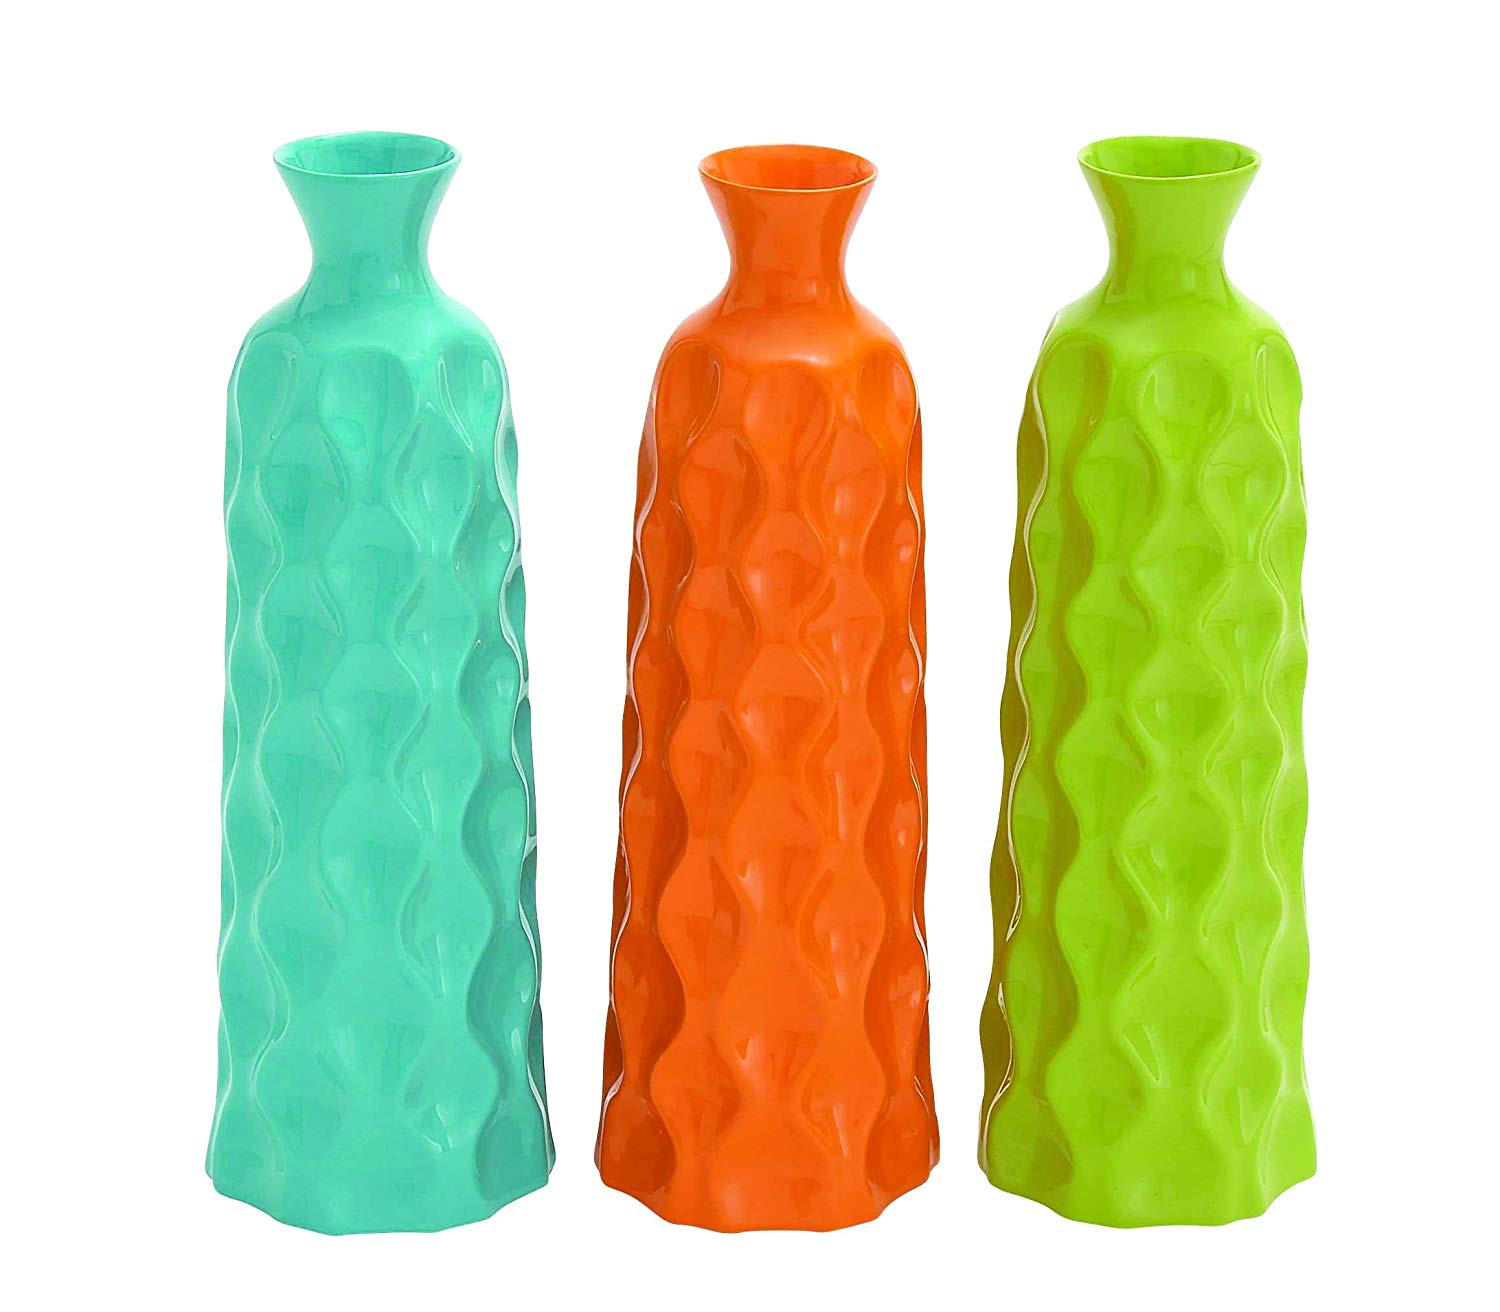 24 Wonderful Imax Agatha Ceramic Vases Set Of 3 2024 free download imax agatha ceramic vases set of 3 of amazon com benzara ceramic vase 3 bright multi color home kitchen within 716xbftrssl sl1500